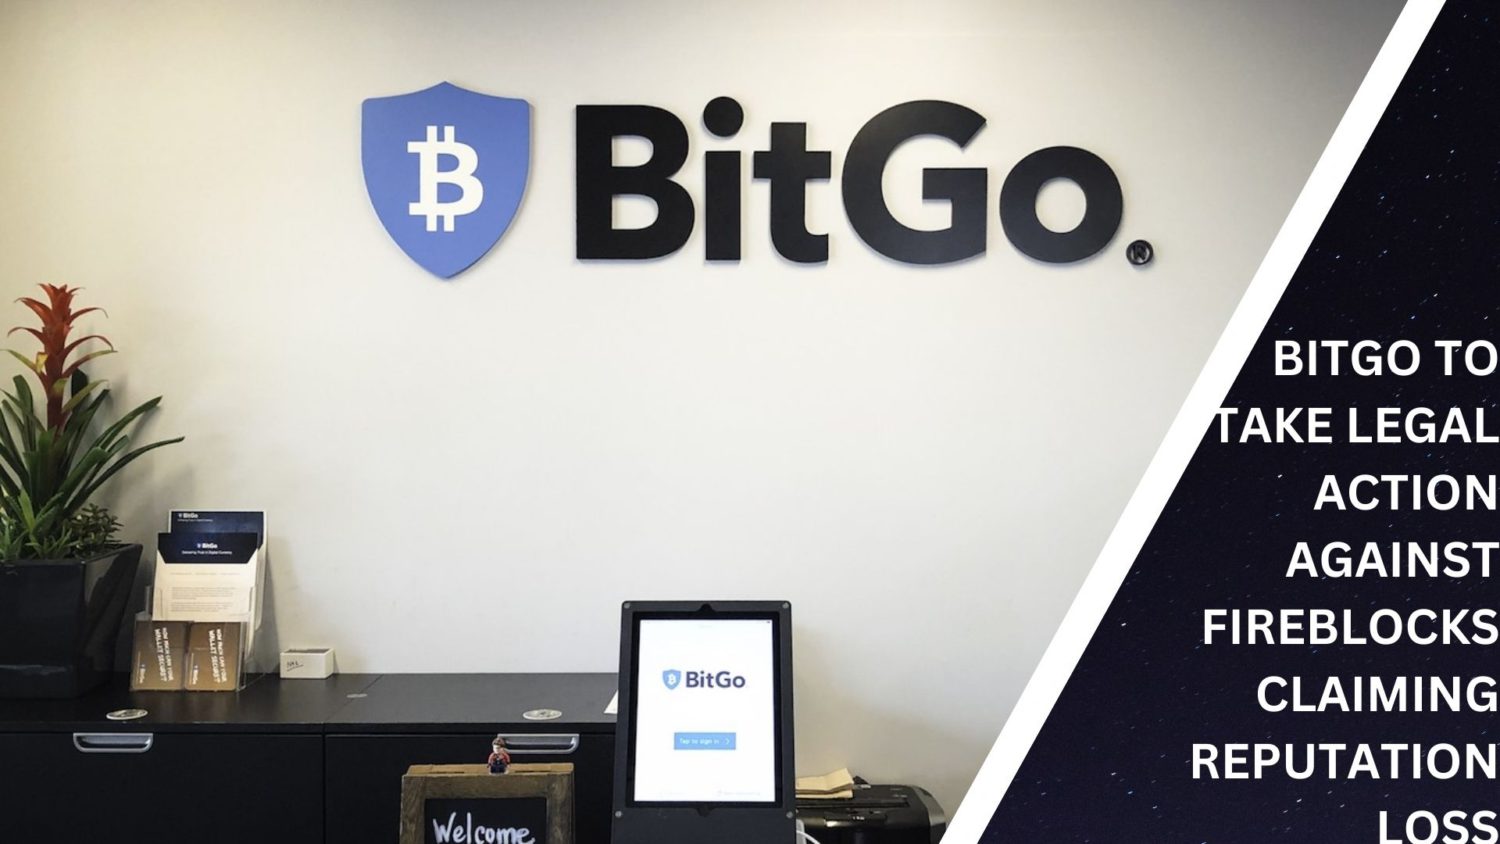 Bitgo To Take Legal Action Against Fireblocks Claiming Reputation Loss